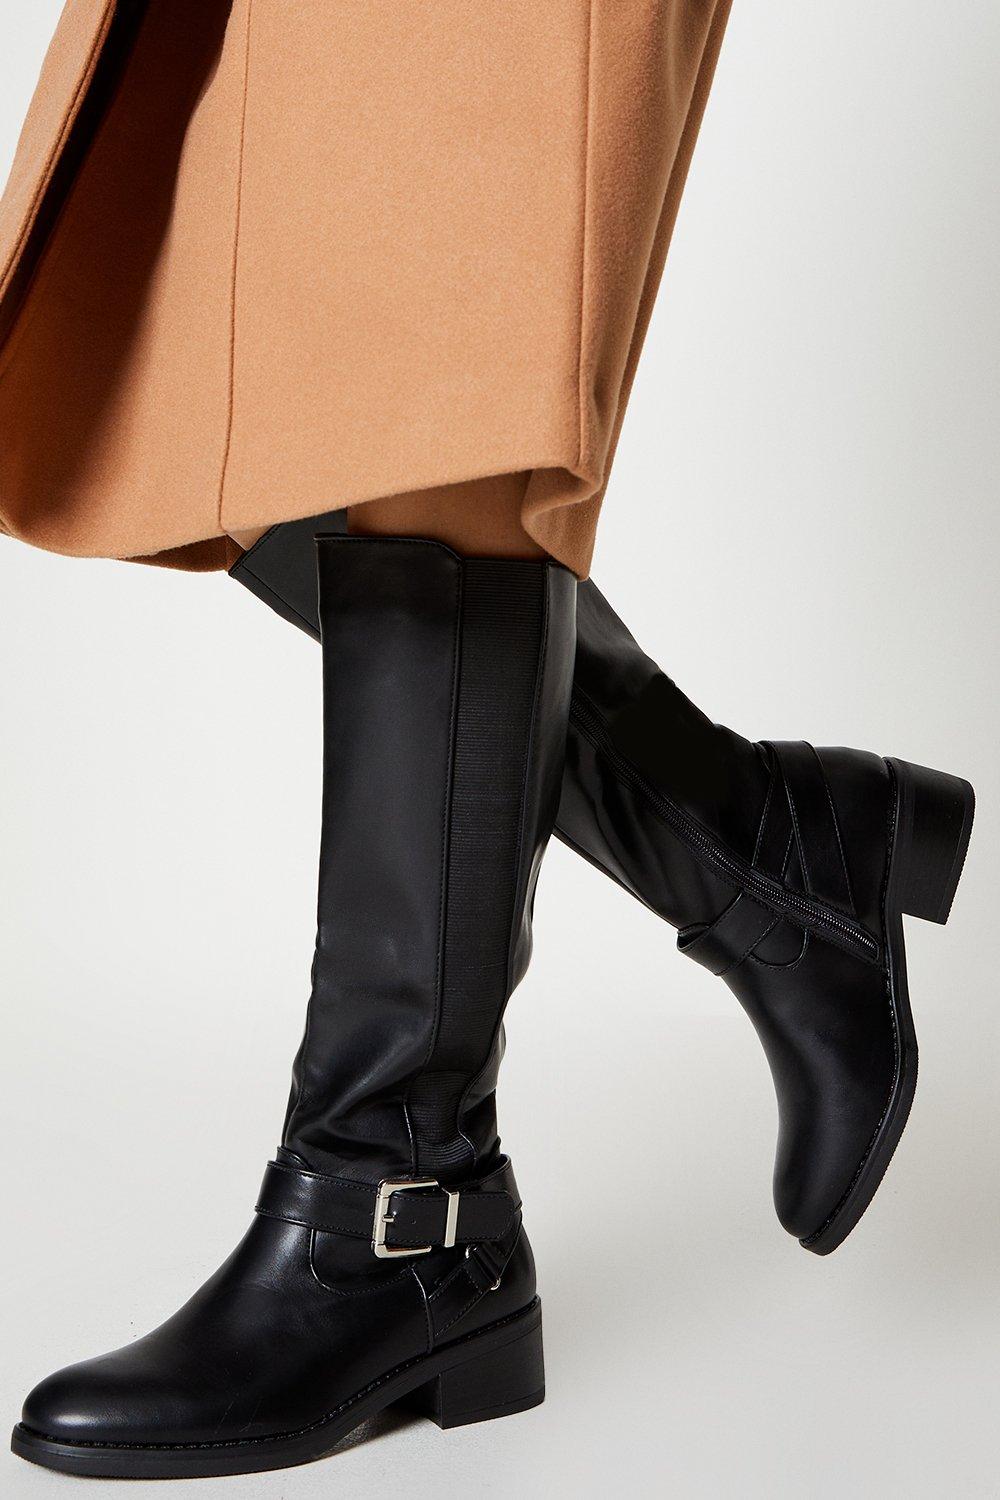 Women’s Kendra Knee High Buckle Boots - black - 7